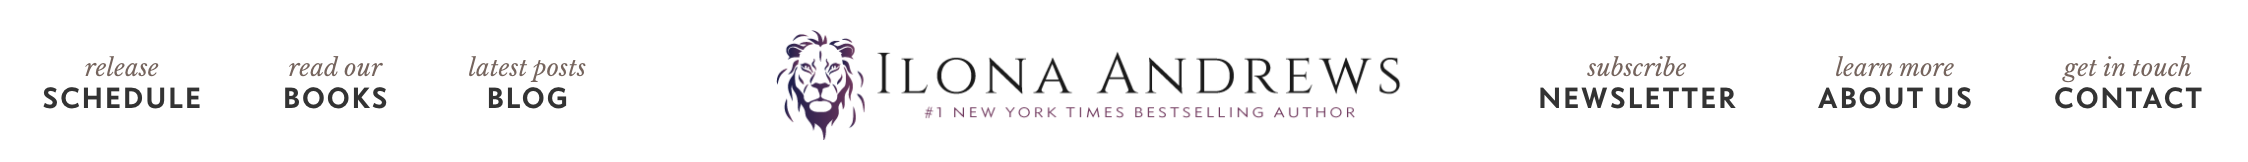 Ilona Andrews' website header